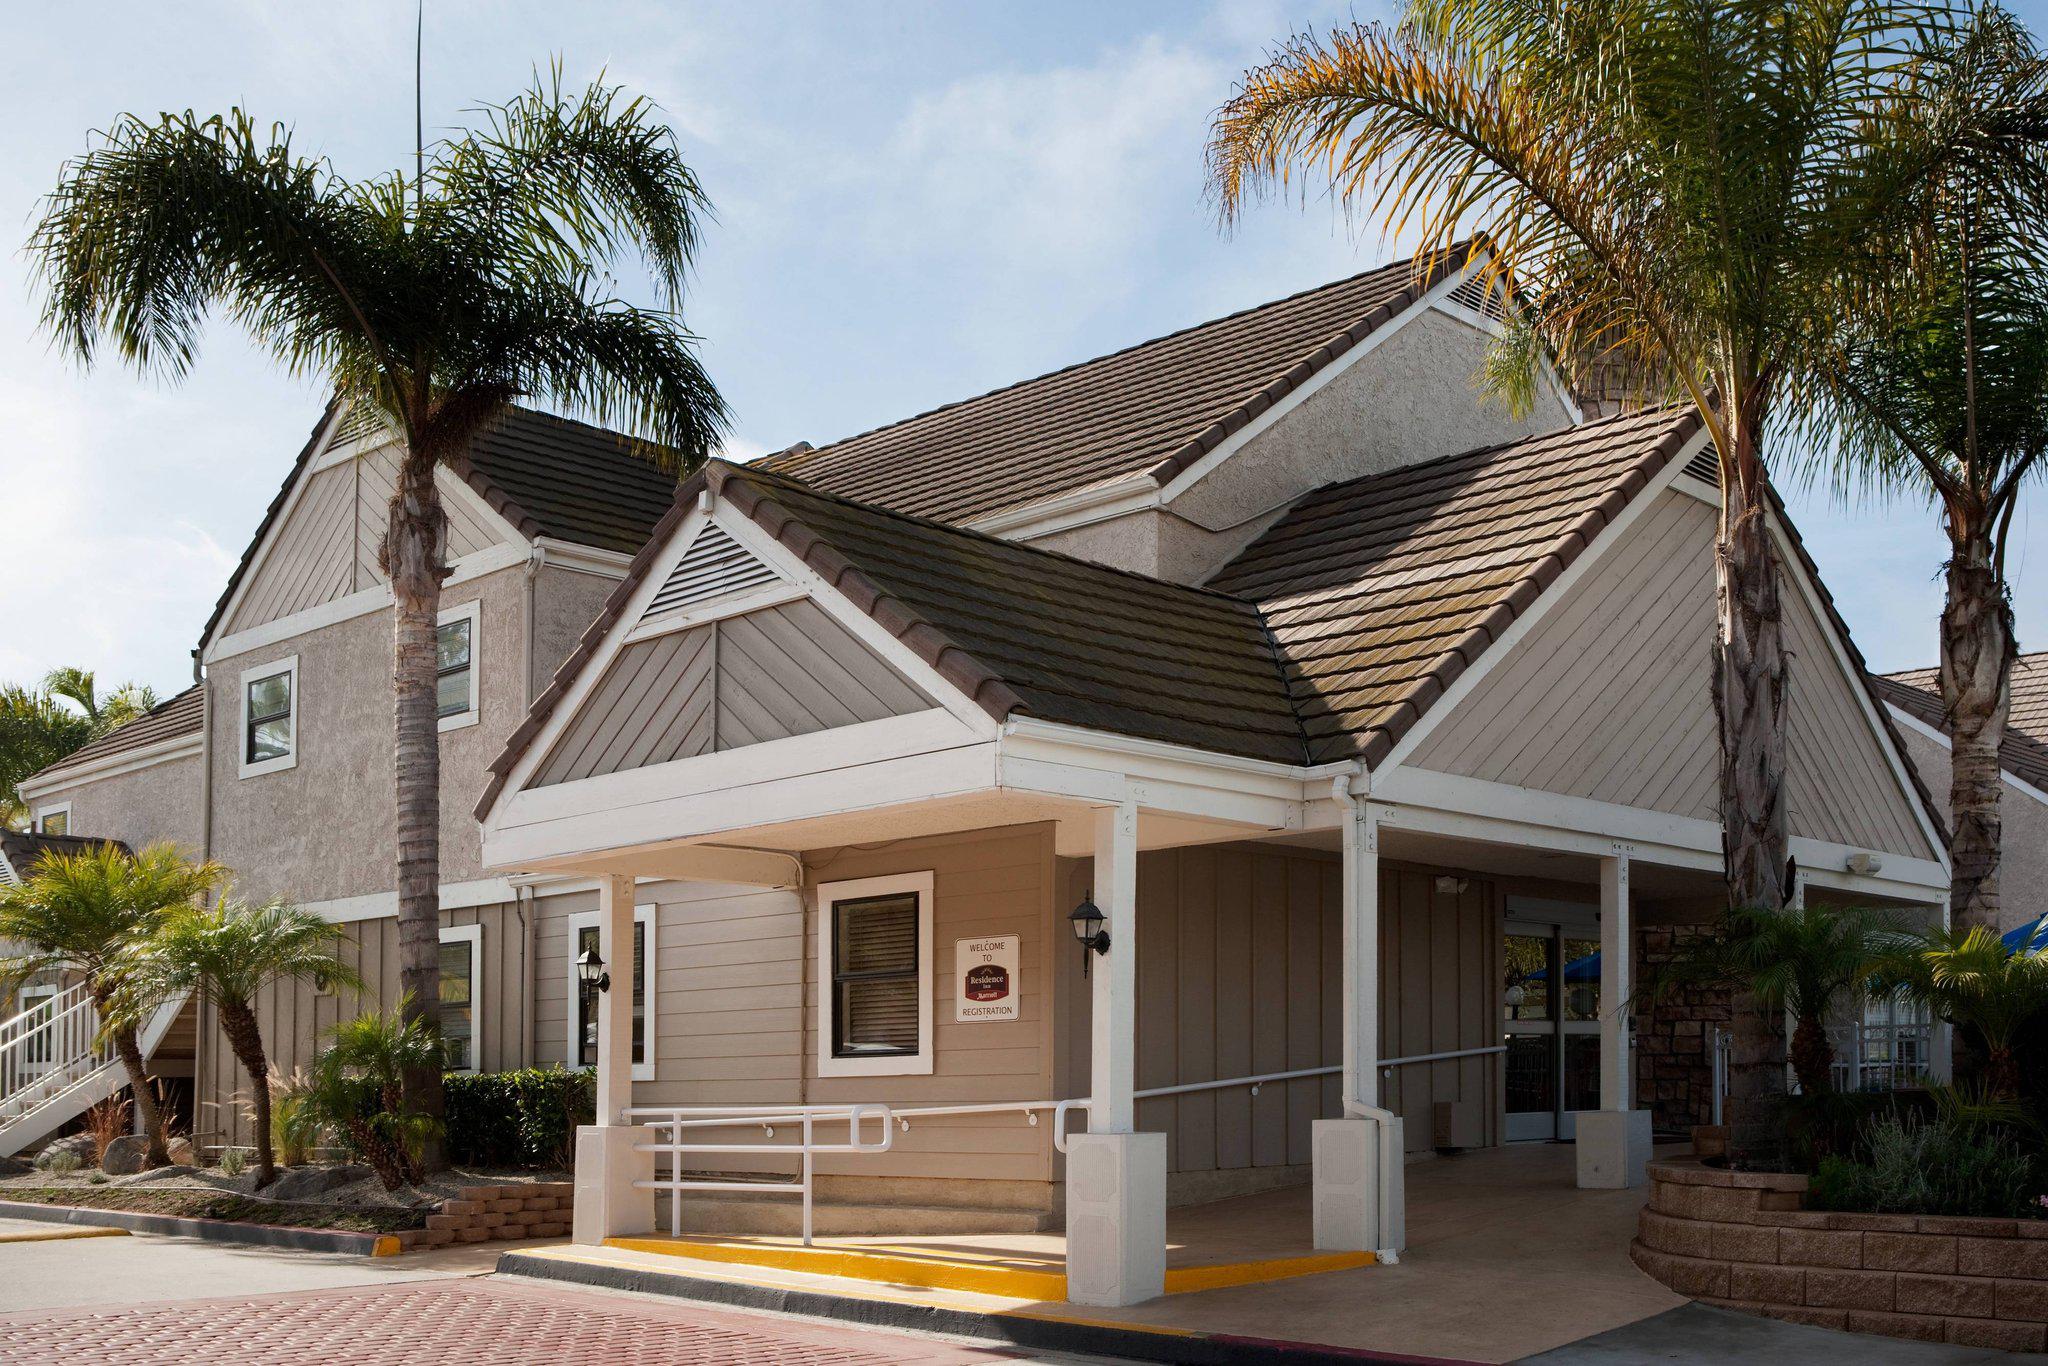 Residence Inn by Marriott Los Angeles Torrance/Redondo Beach